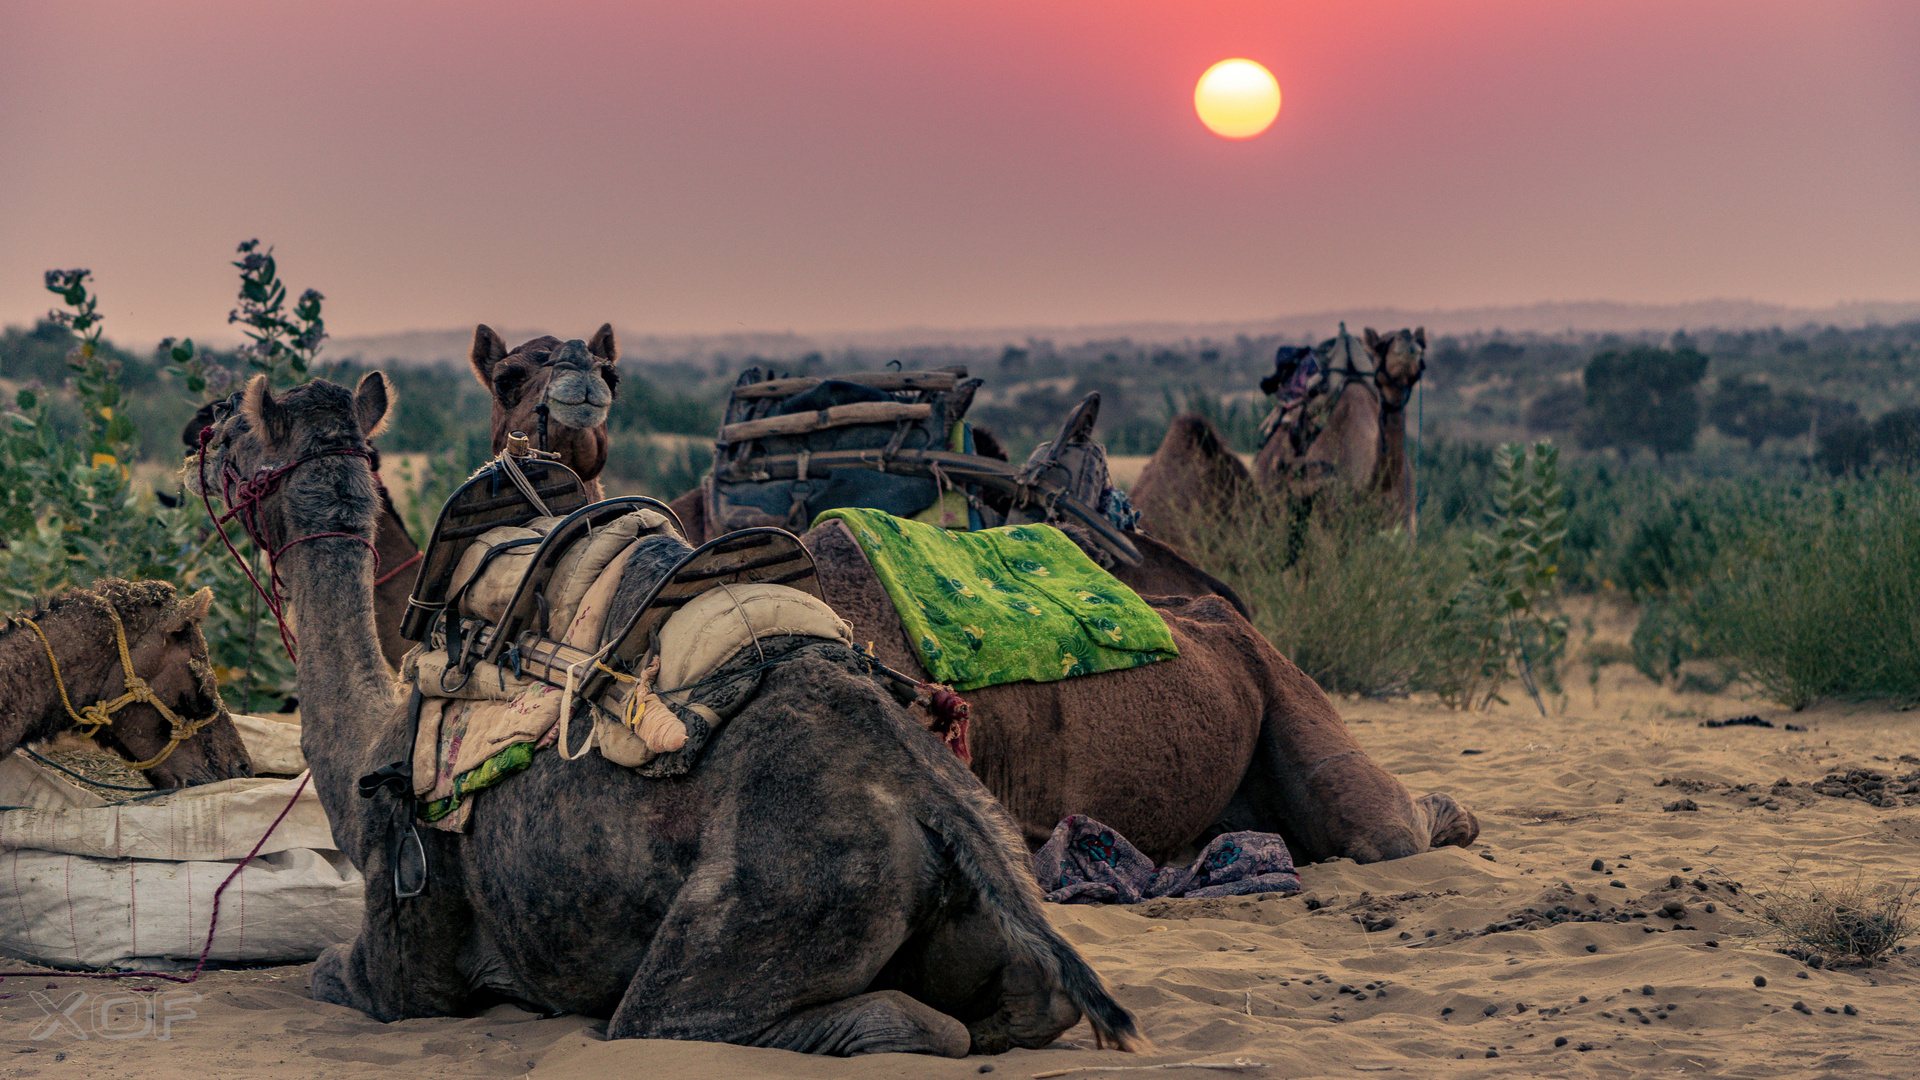 Sunset in Indien desert